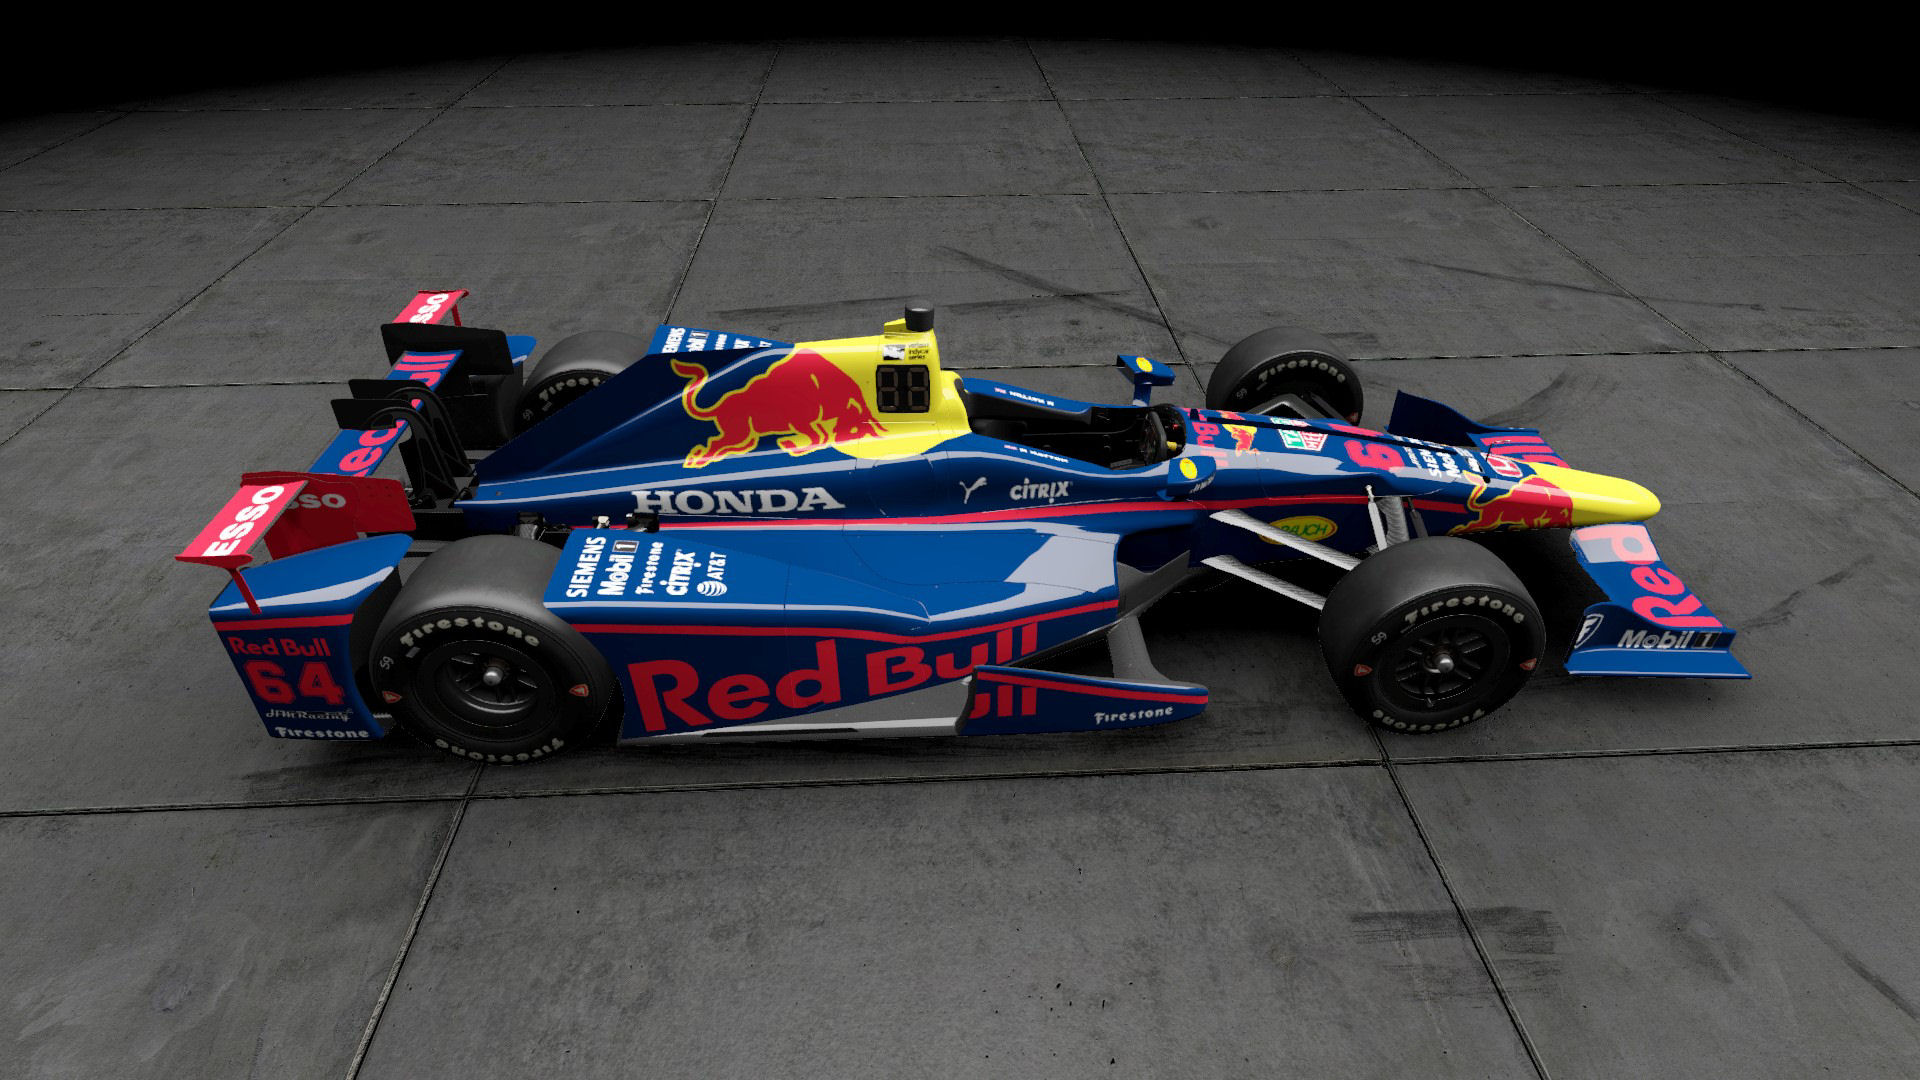 Red Bull dallara dw12 Honda oval 03.jpg